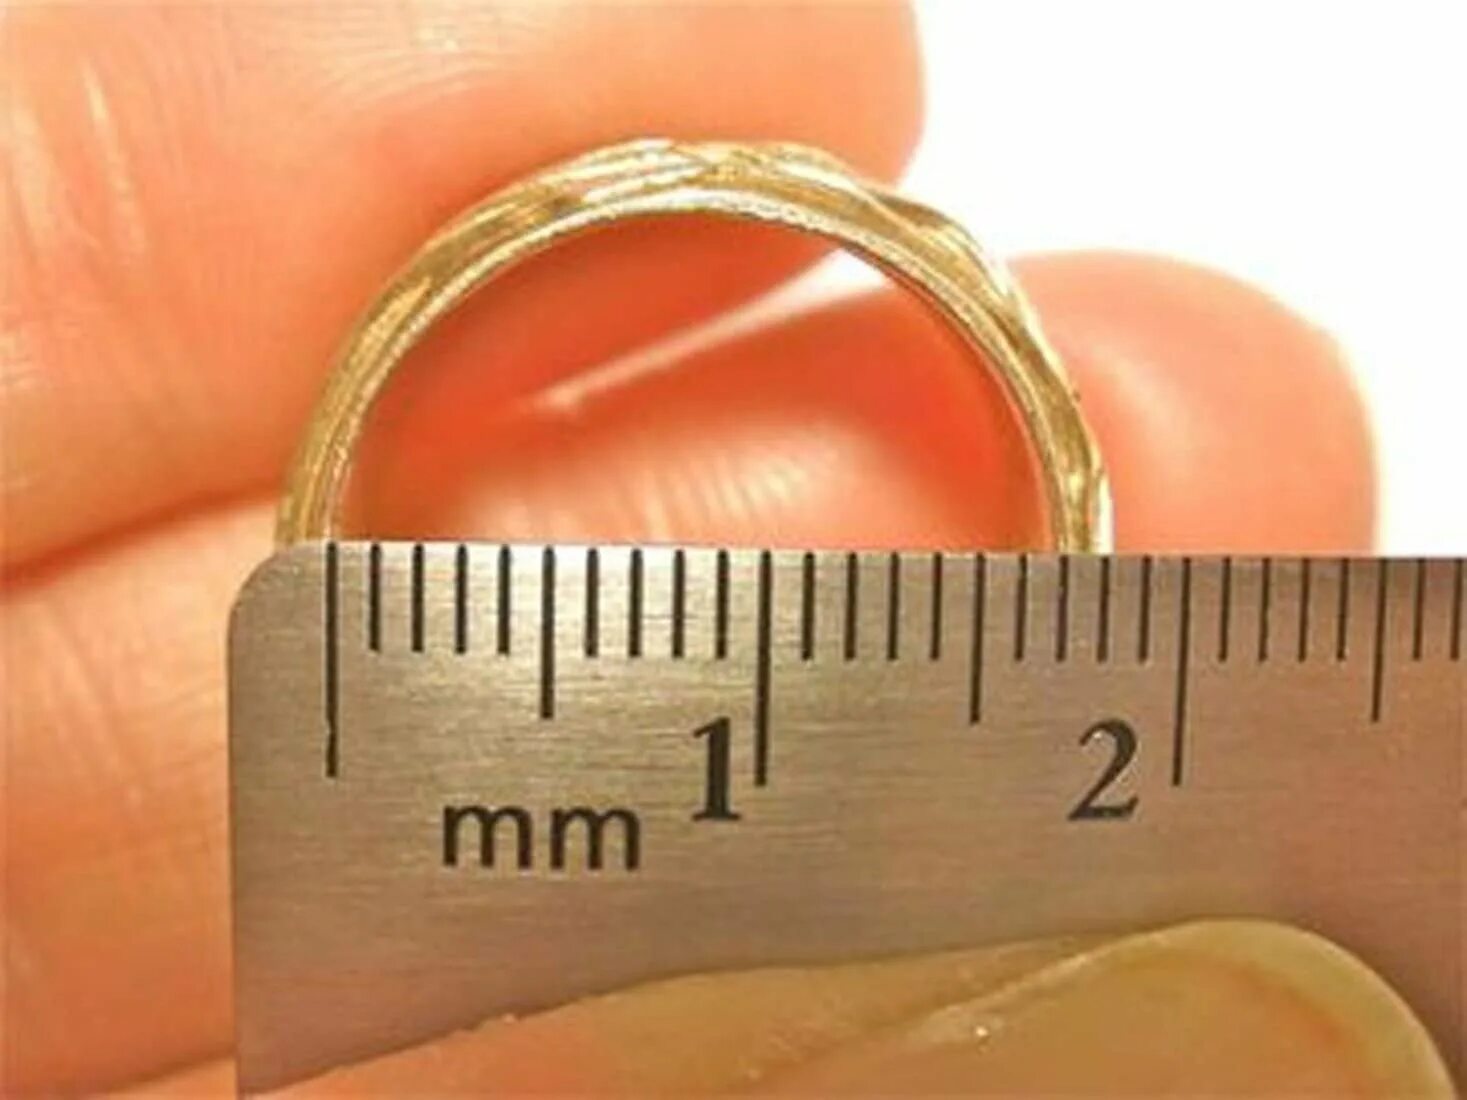 Кольцо 19 мм. 16 Размер кольца. Диаметр кольца 18 мм. 20 Мм размер кольца. Диаметр кольца 3 см.